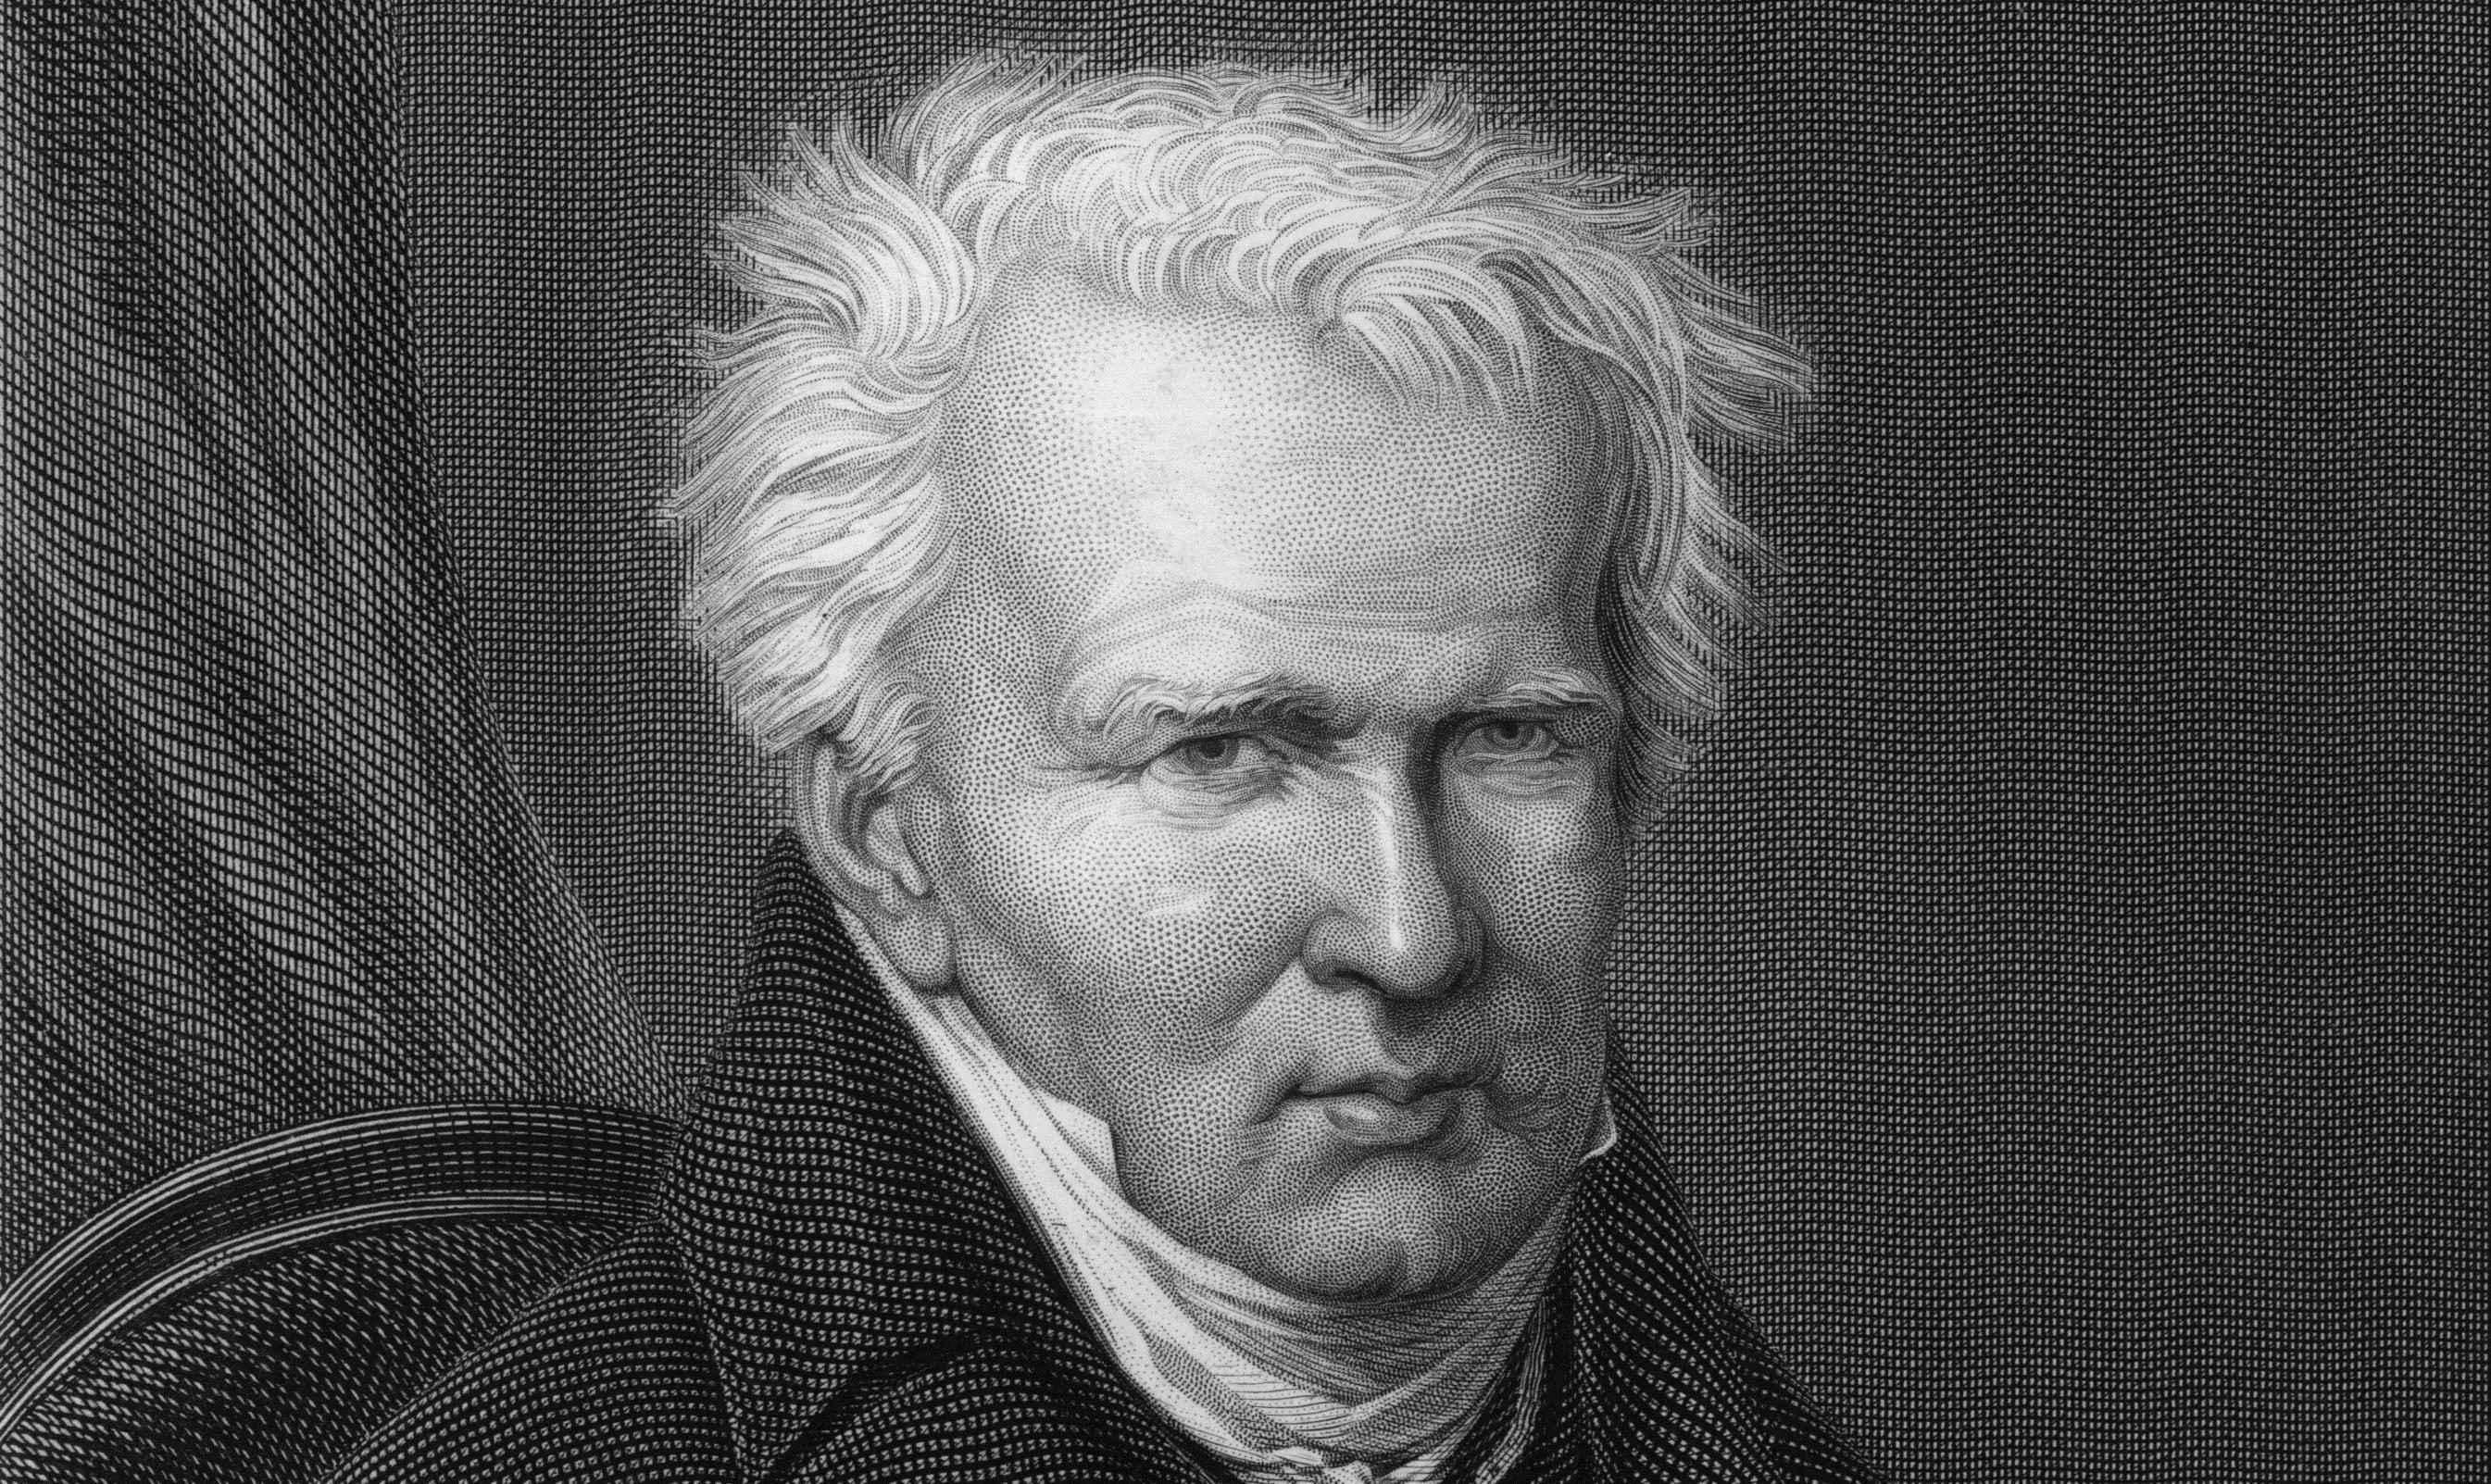 German naturalist Baron Alexander von Humboldt (1769 - 1859). (Photo by Hulton Archive/Getty Images)